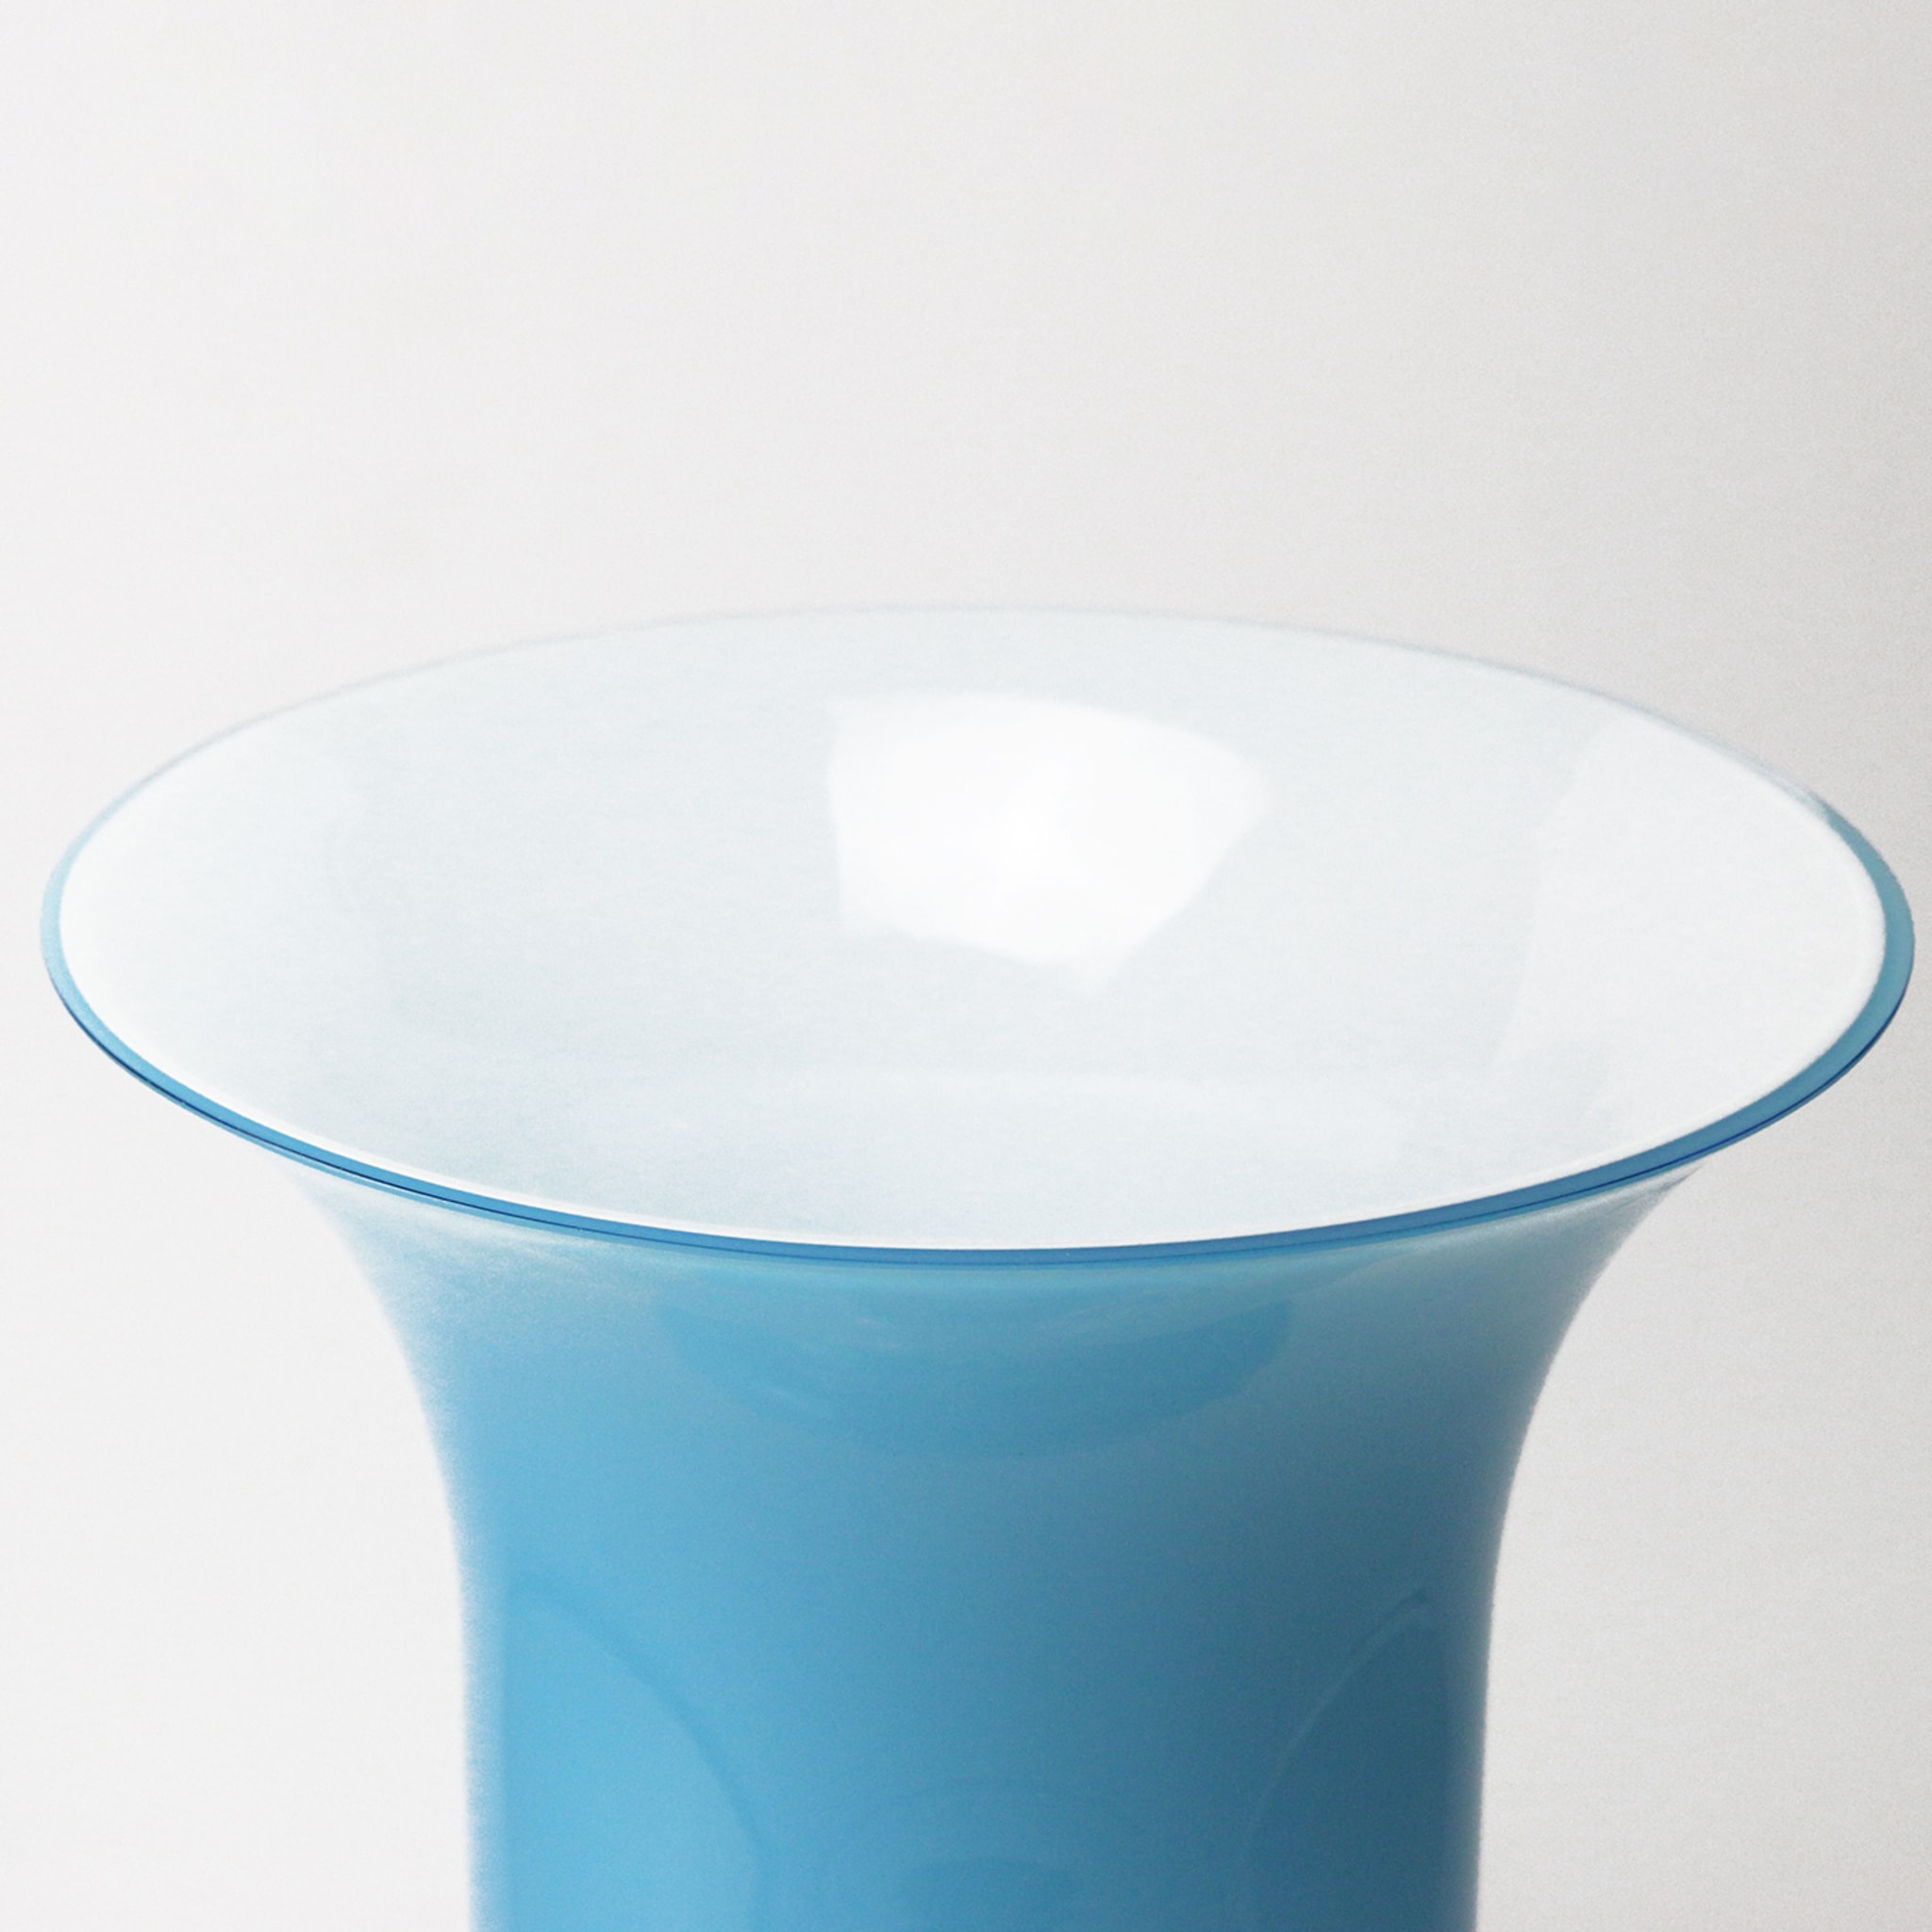 Incamiciato Turquoise Vase - Alternative view 1